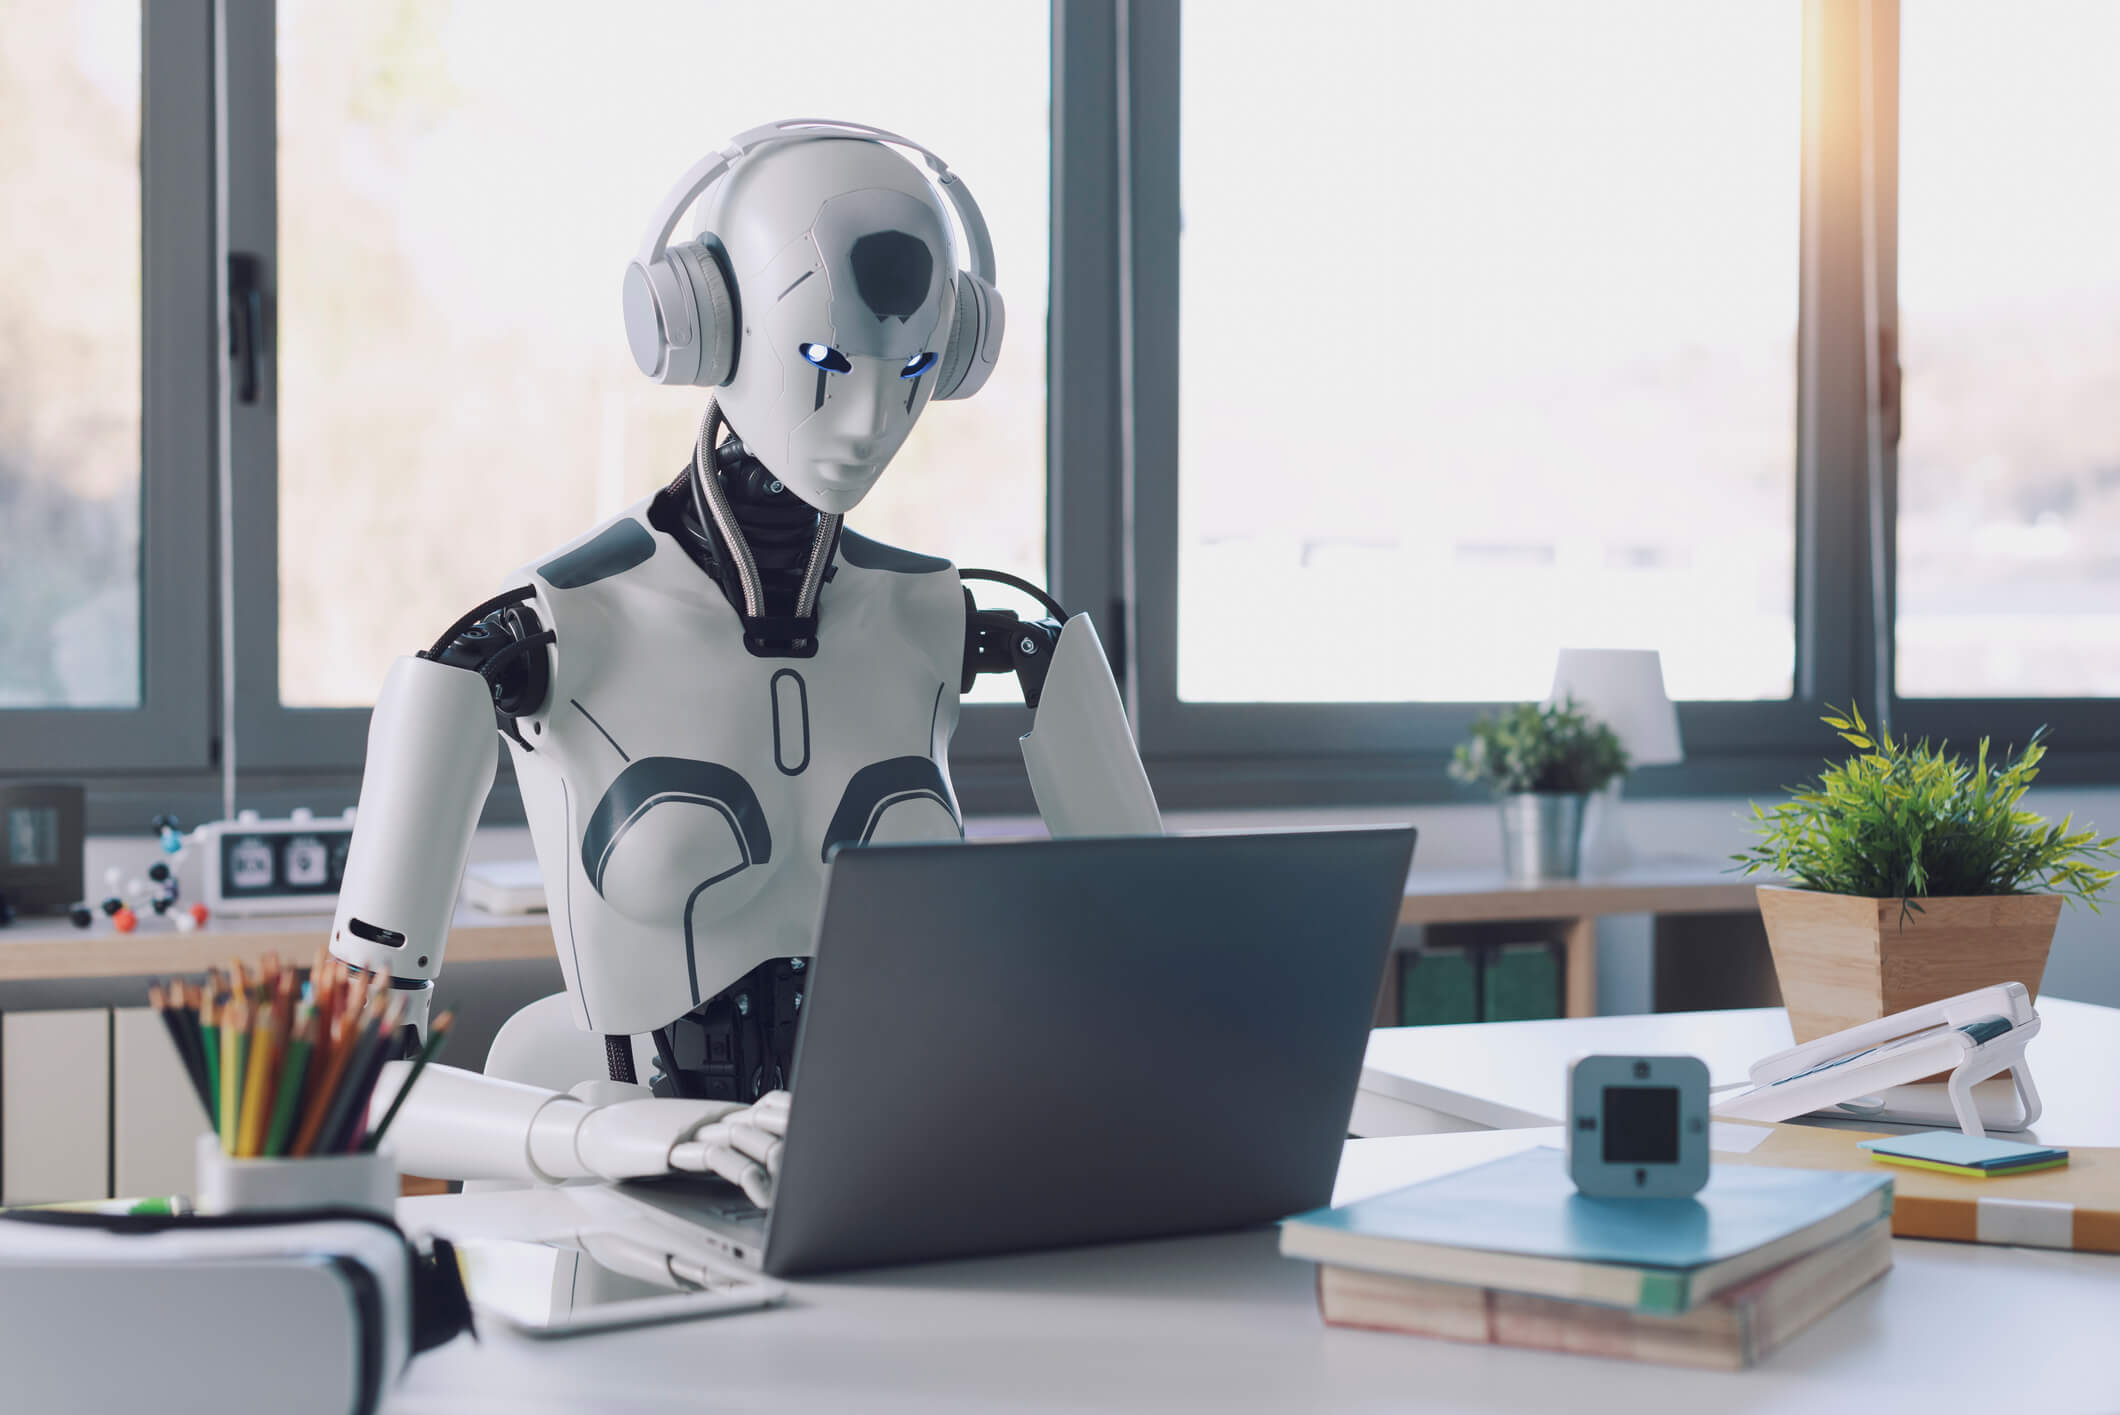 Ai robot sat at an office desk working on a laptop